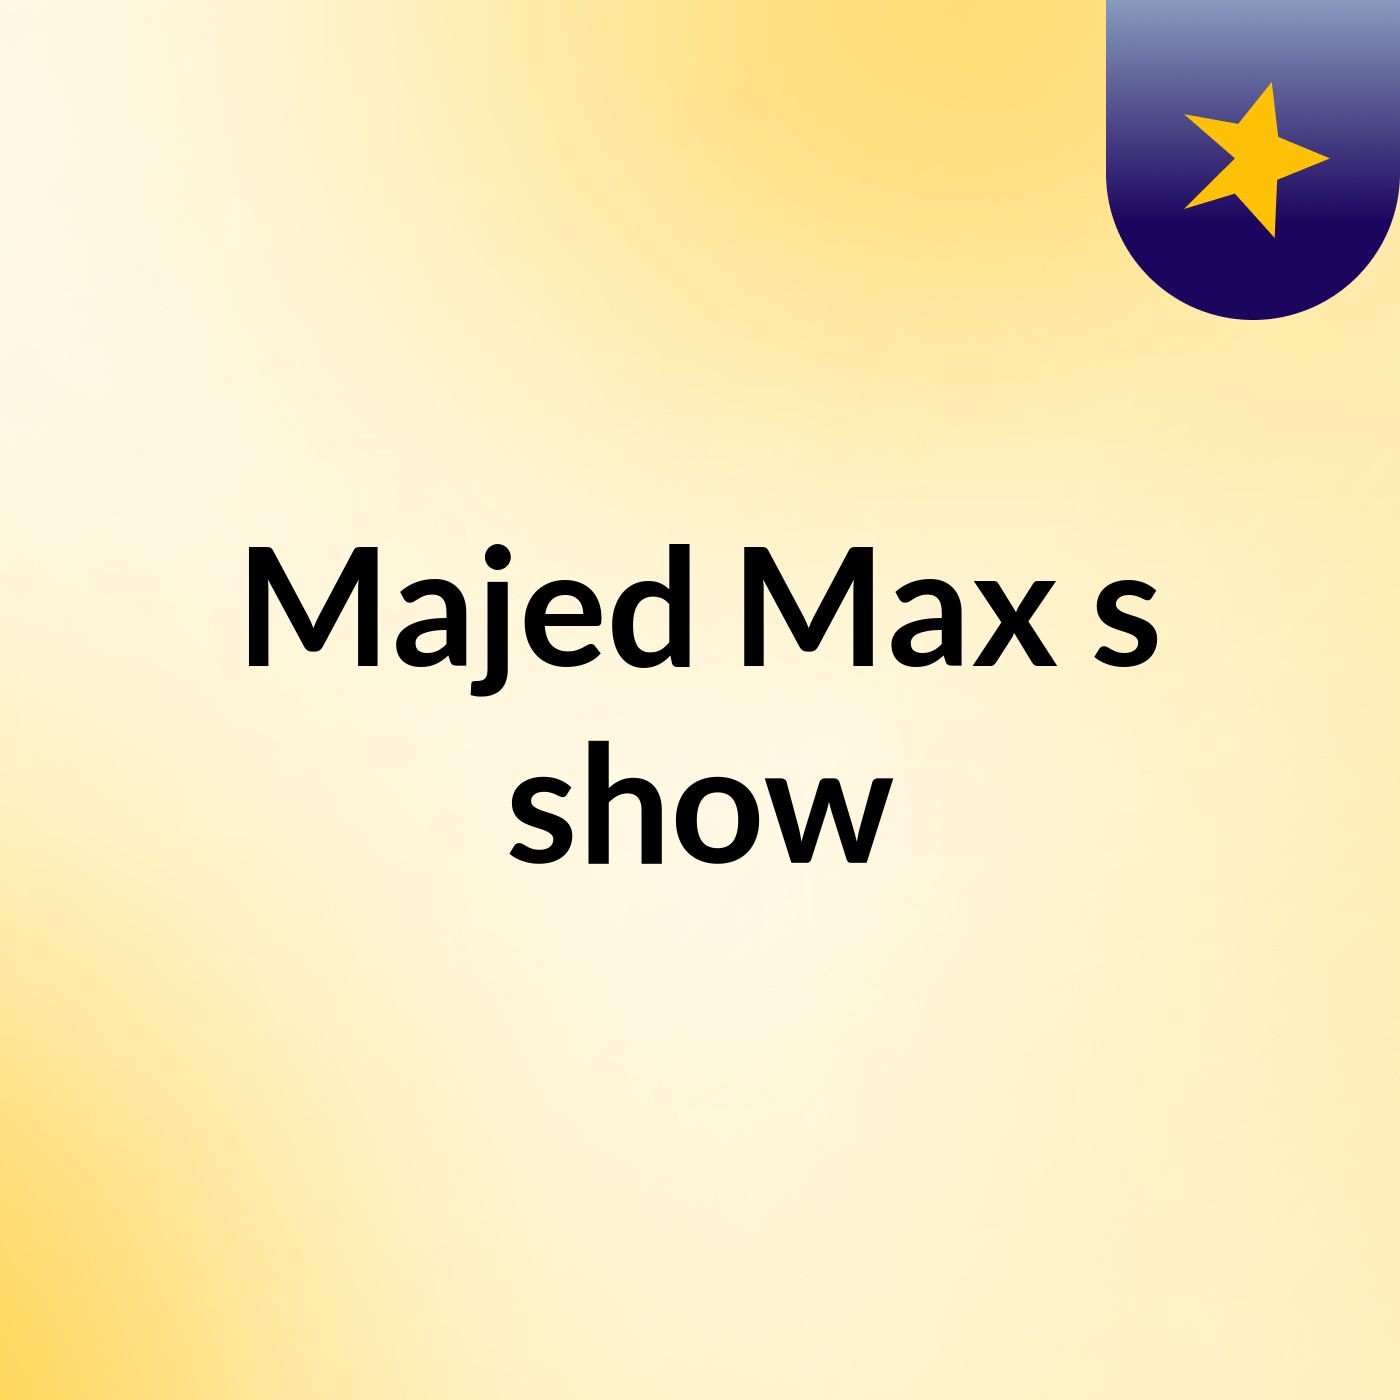 Majed Max's show